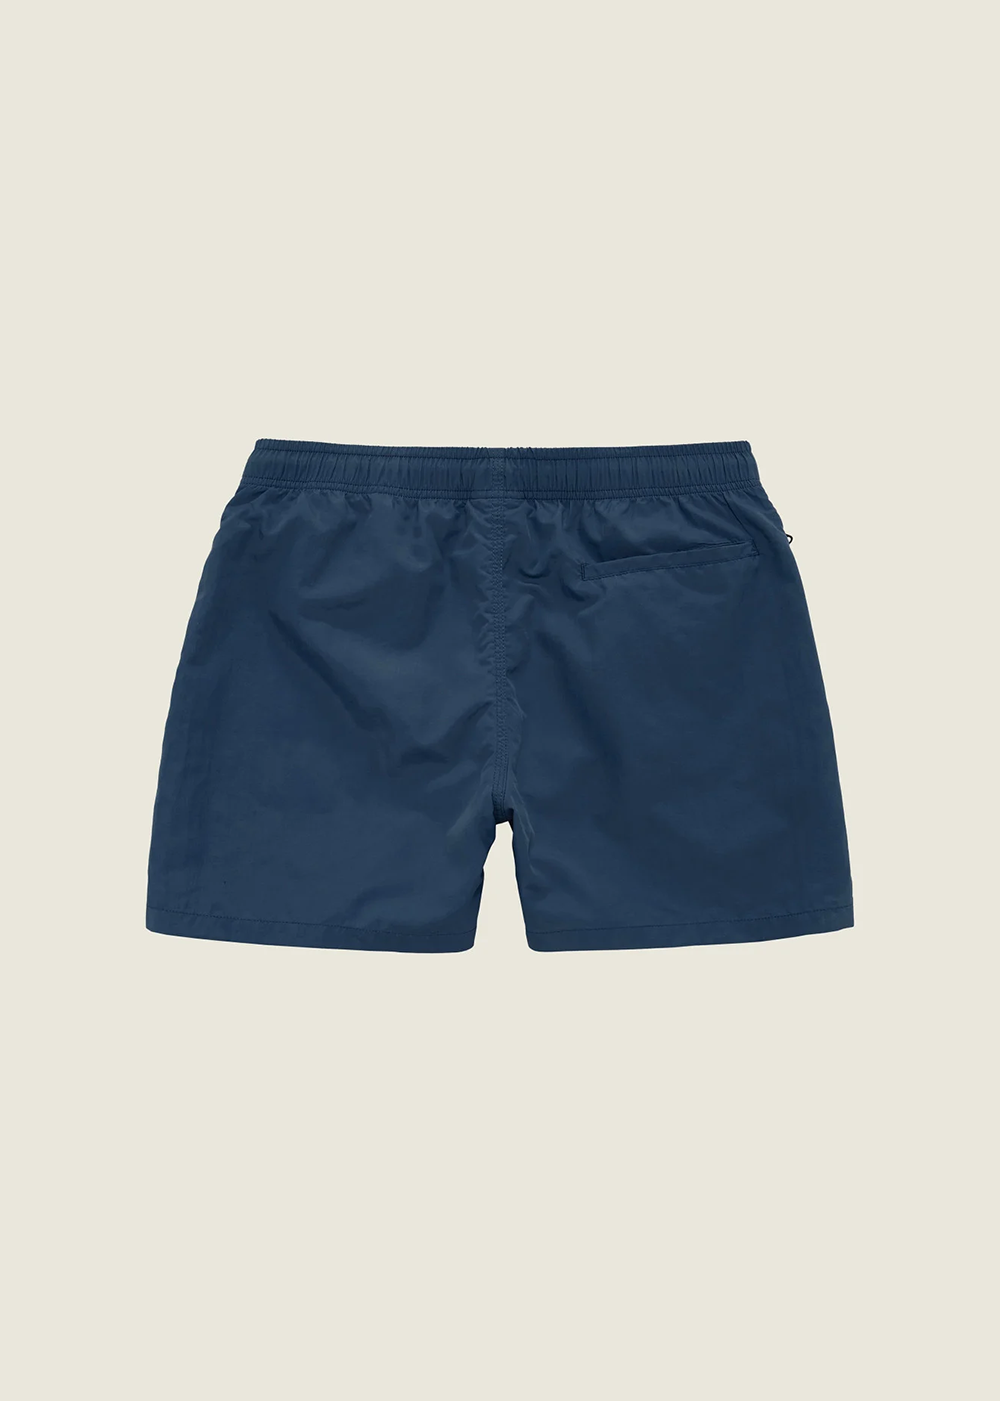 Nylon Swim Shorts - OAS Company - Danali